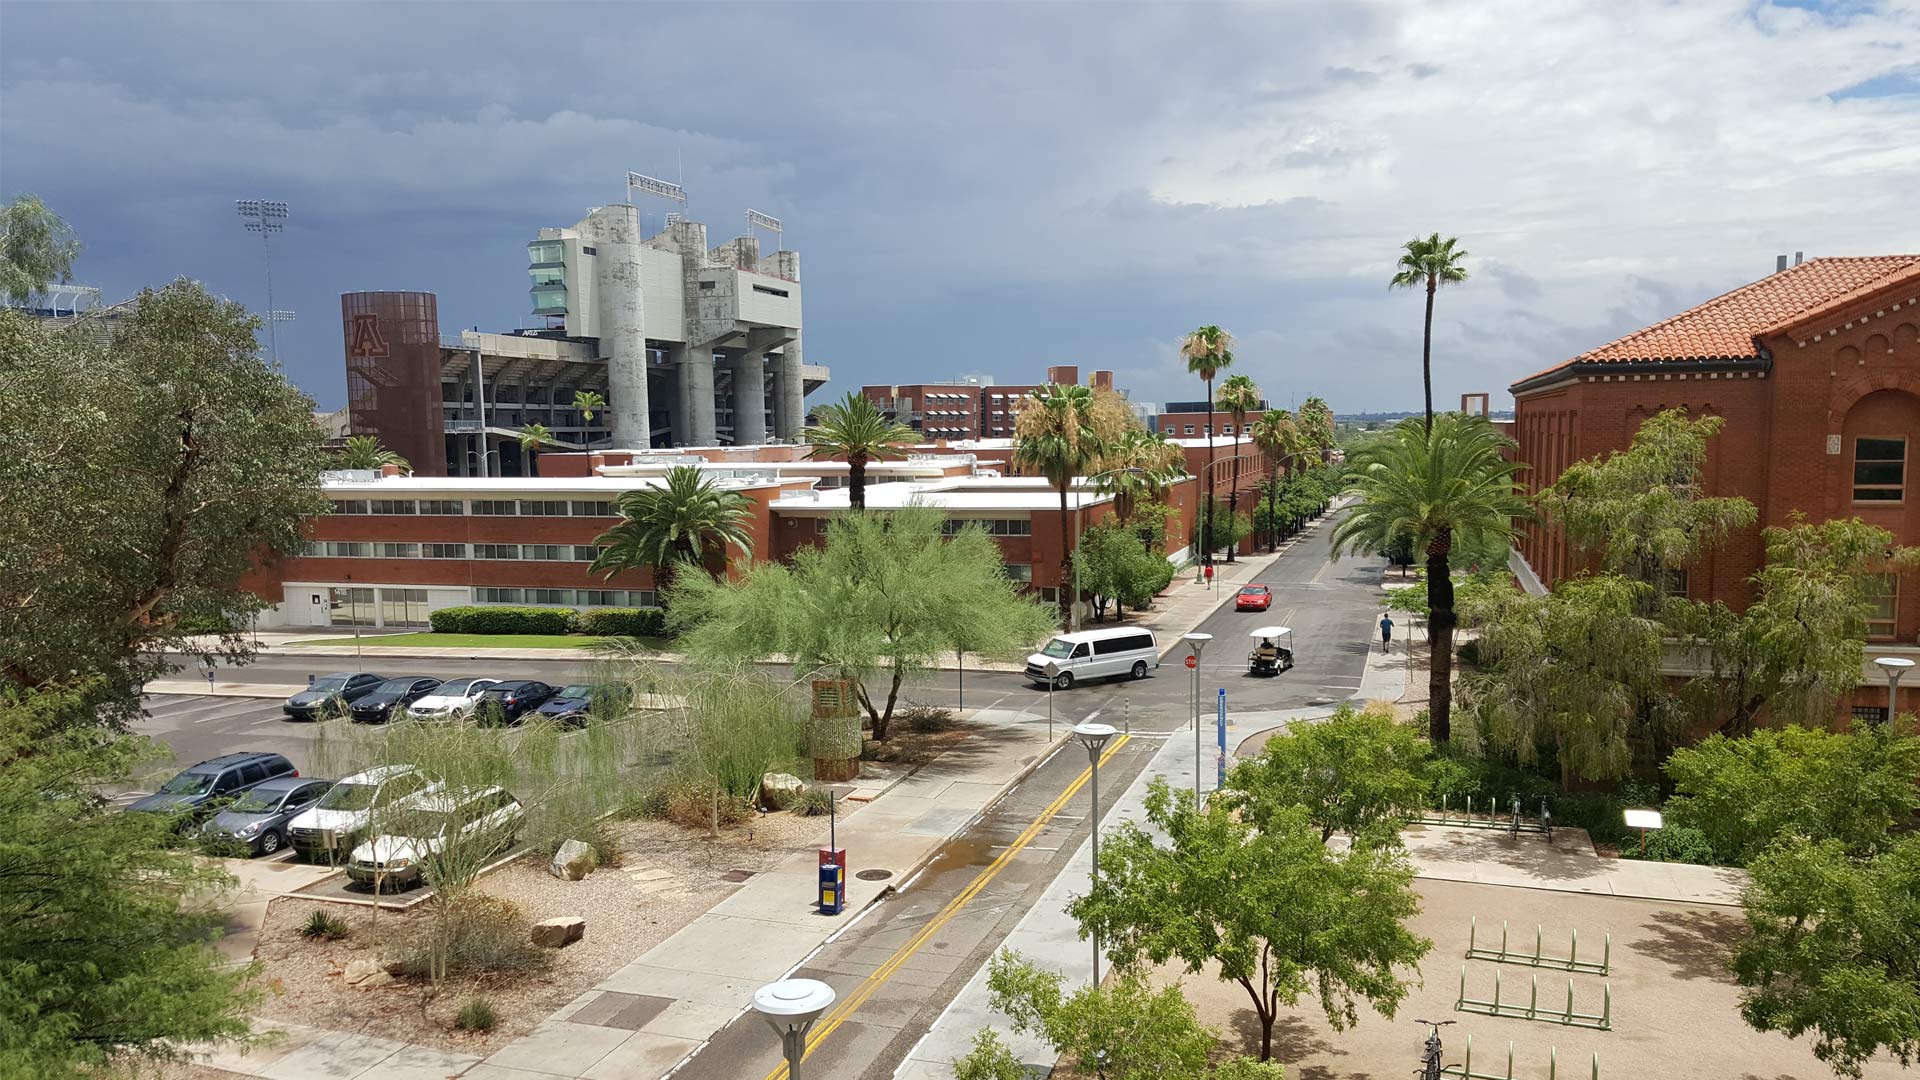 Monsoon clouds darken the sky over the campus of the University of Arizona and Arizona Stadium.